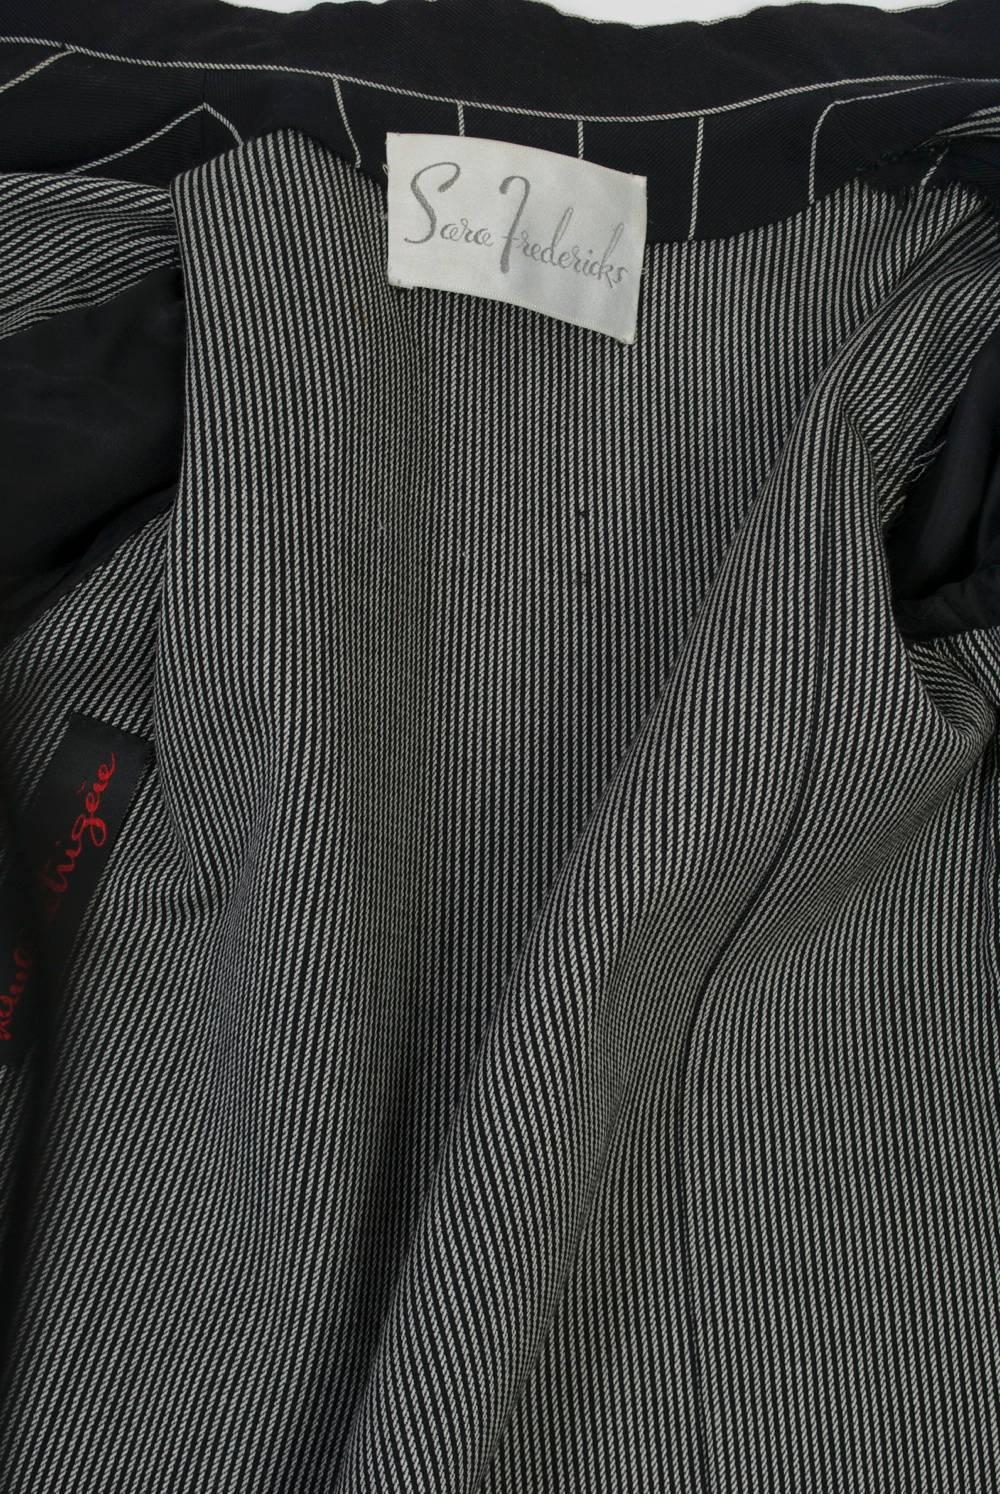 Trigere Black/White Striped 1980s Coat 5